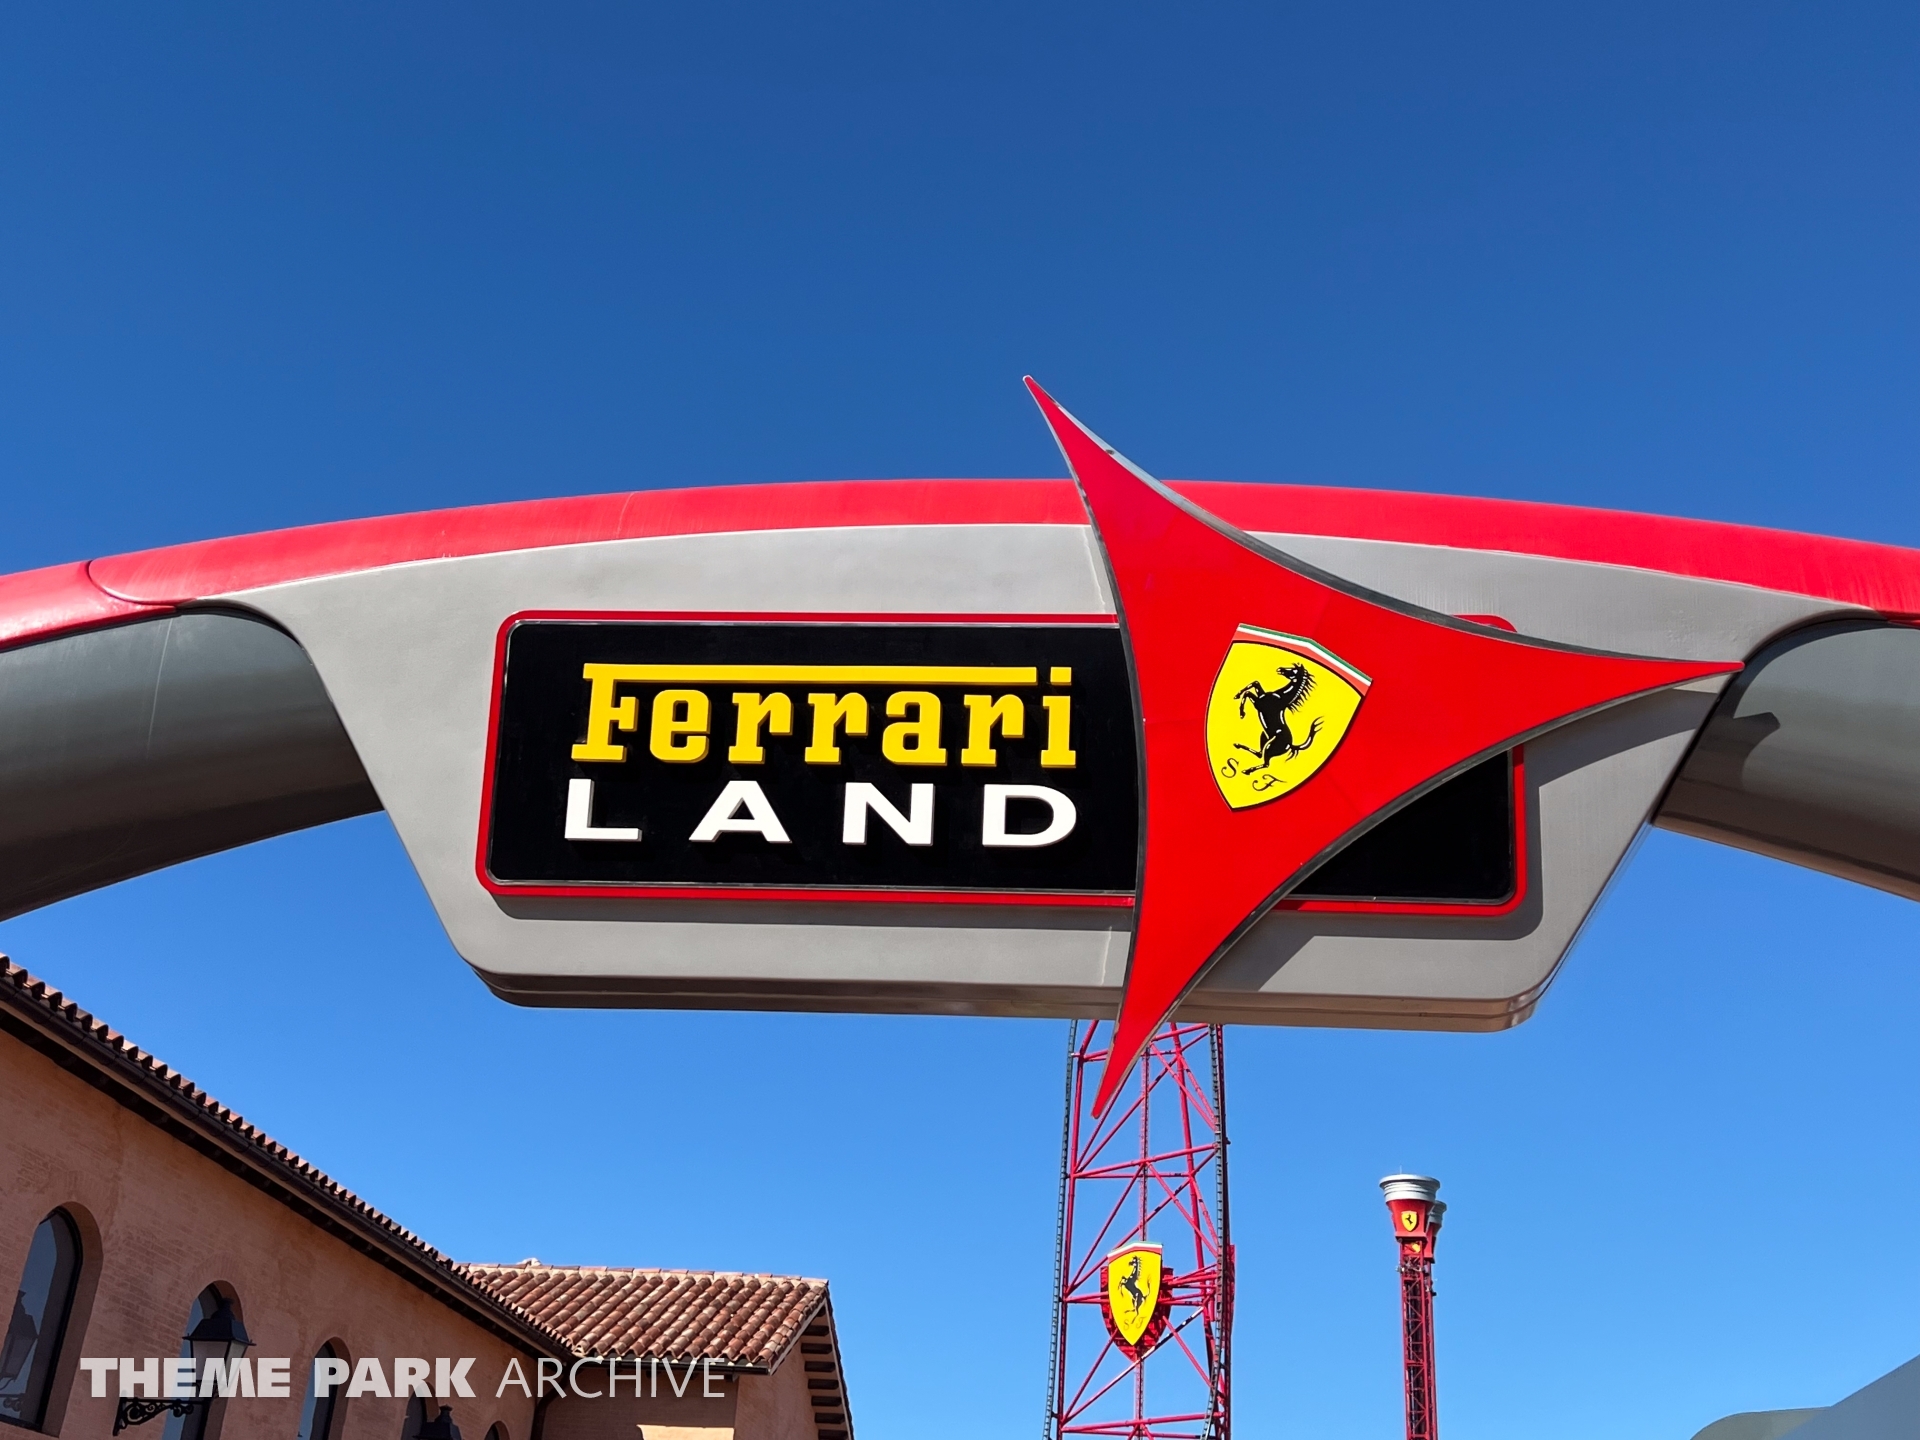 Entrance at Ferrari Land